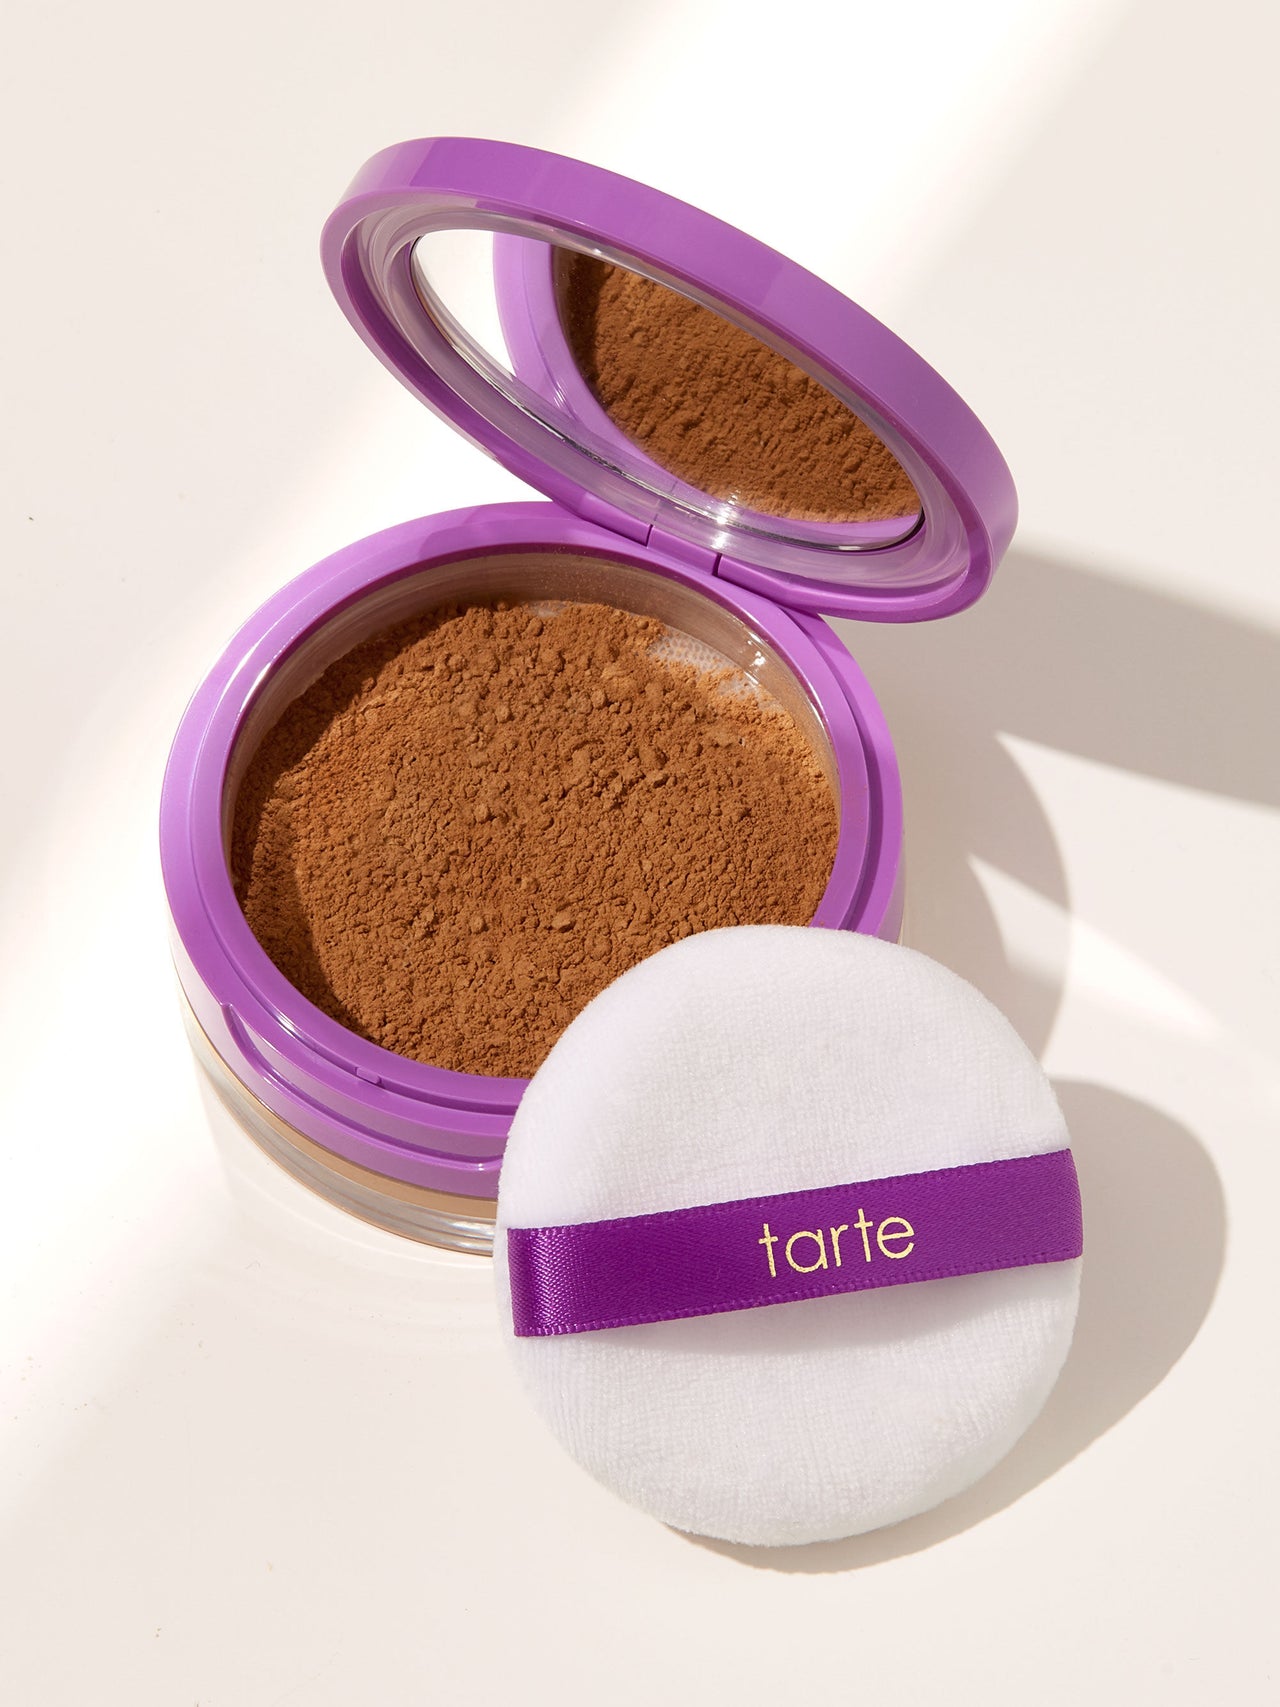 Tarte "Translucent Tan-Deep" Shape Tape Setting Powder